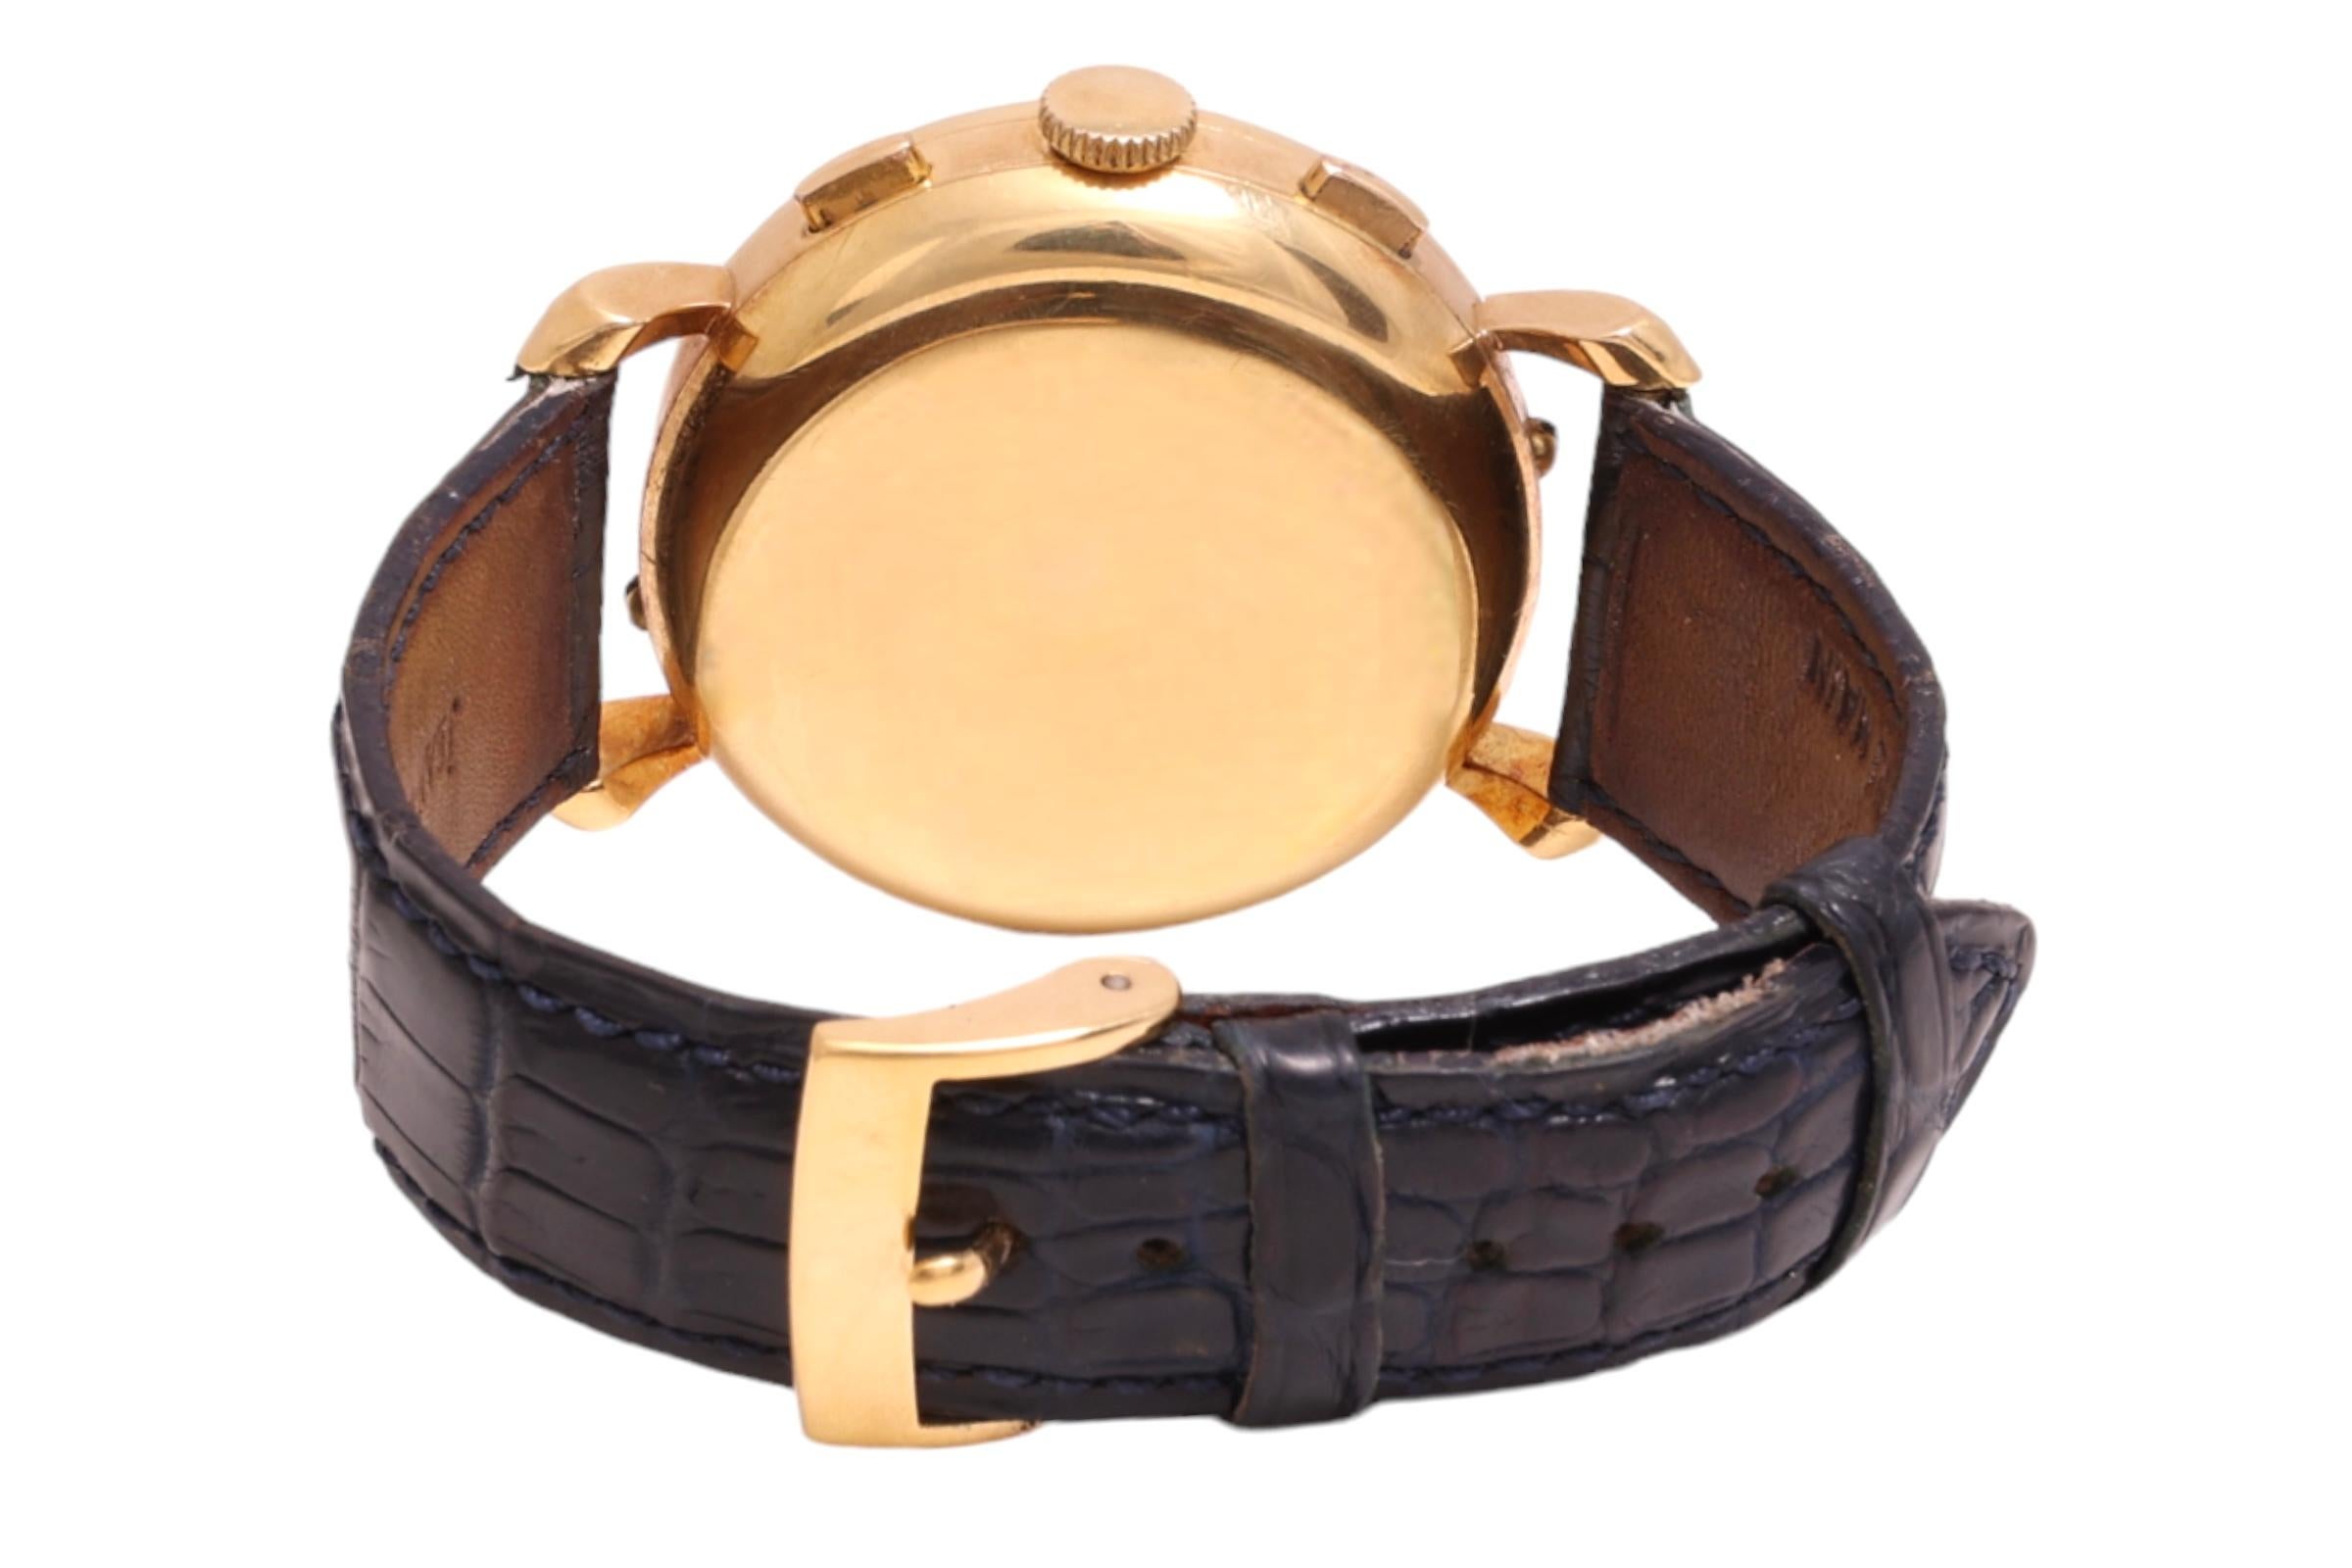 18 Kt Gold Angelus Chronodate Triple Date Jumbo 38mm Chronograph Wrist Watch For Sale 1